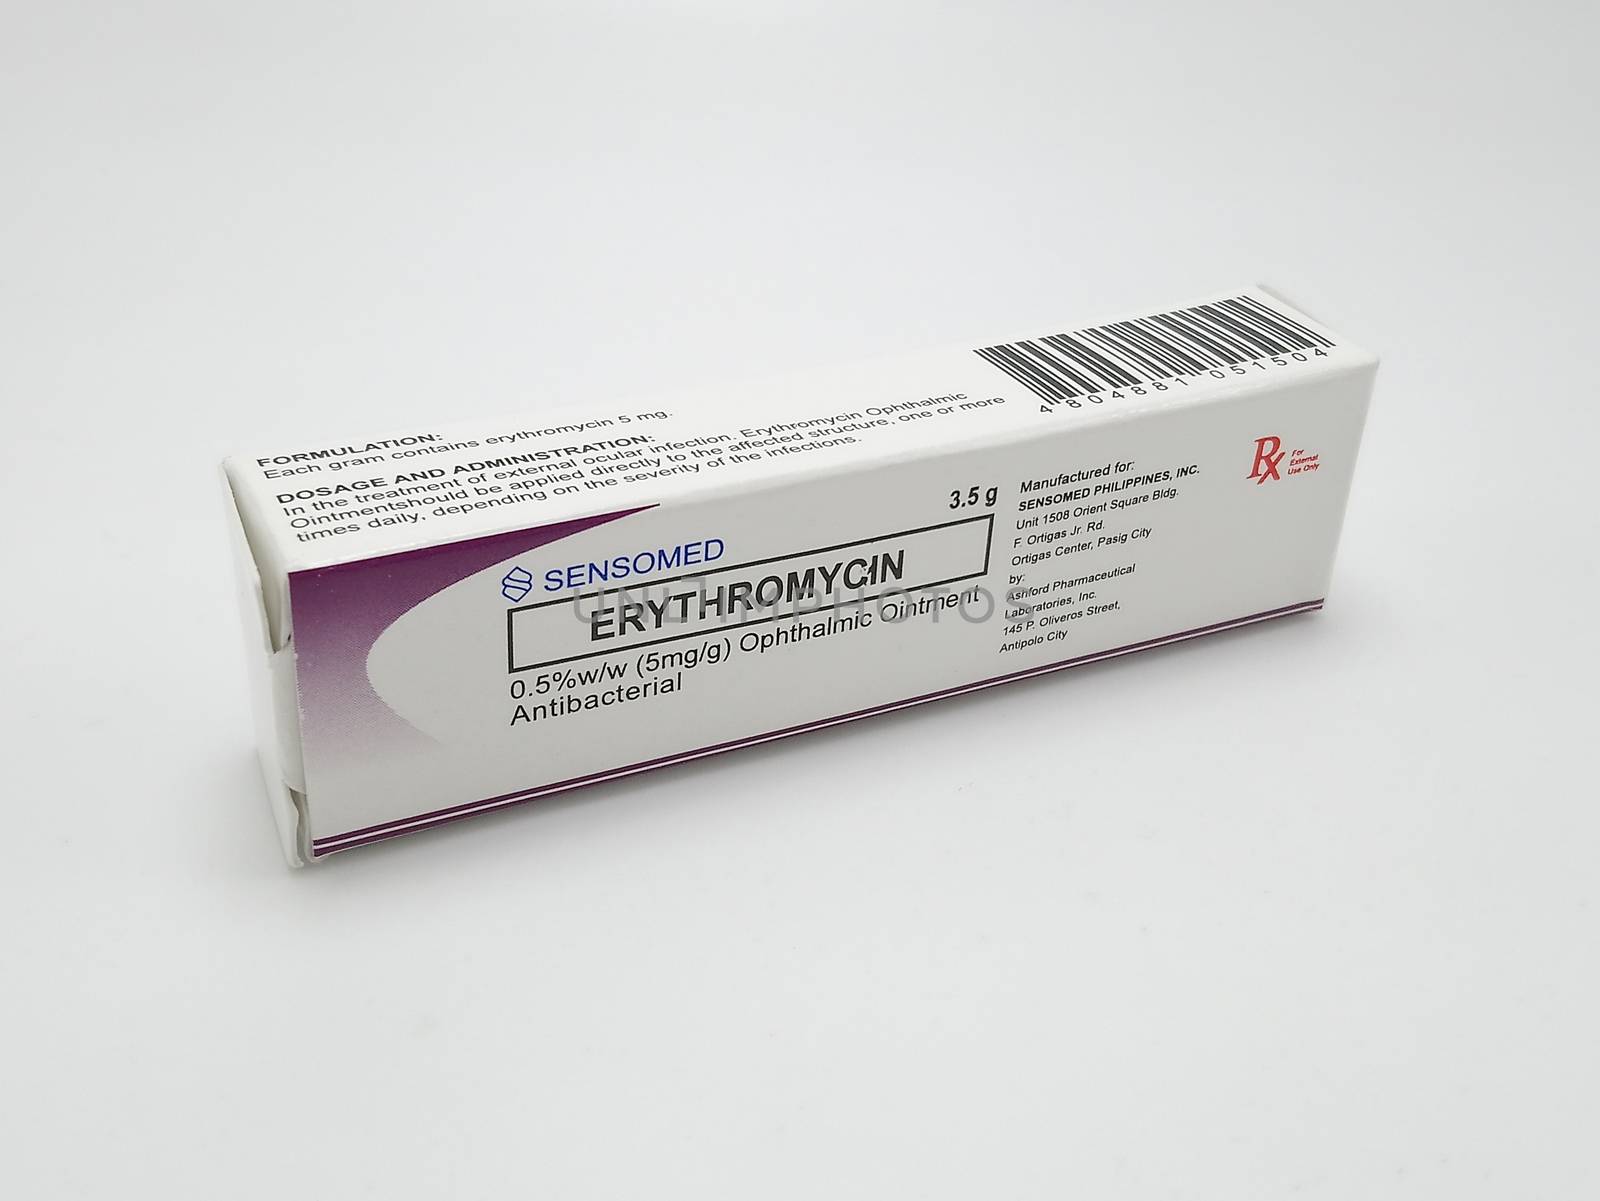 Sensomed erythromycin ointment box in Manila, Philippines by imwaltersy